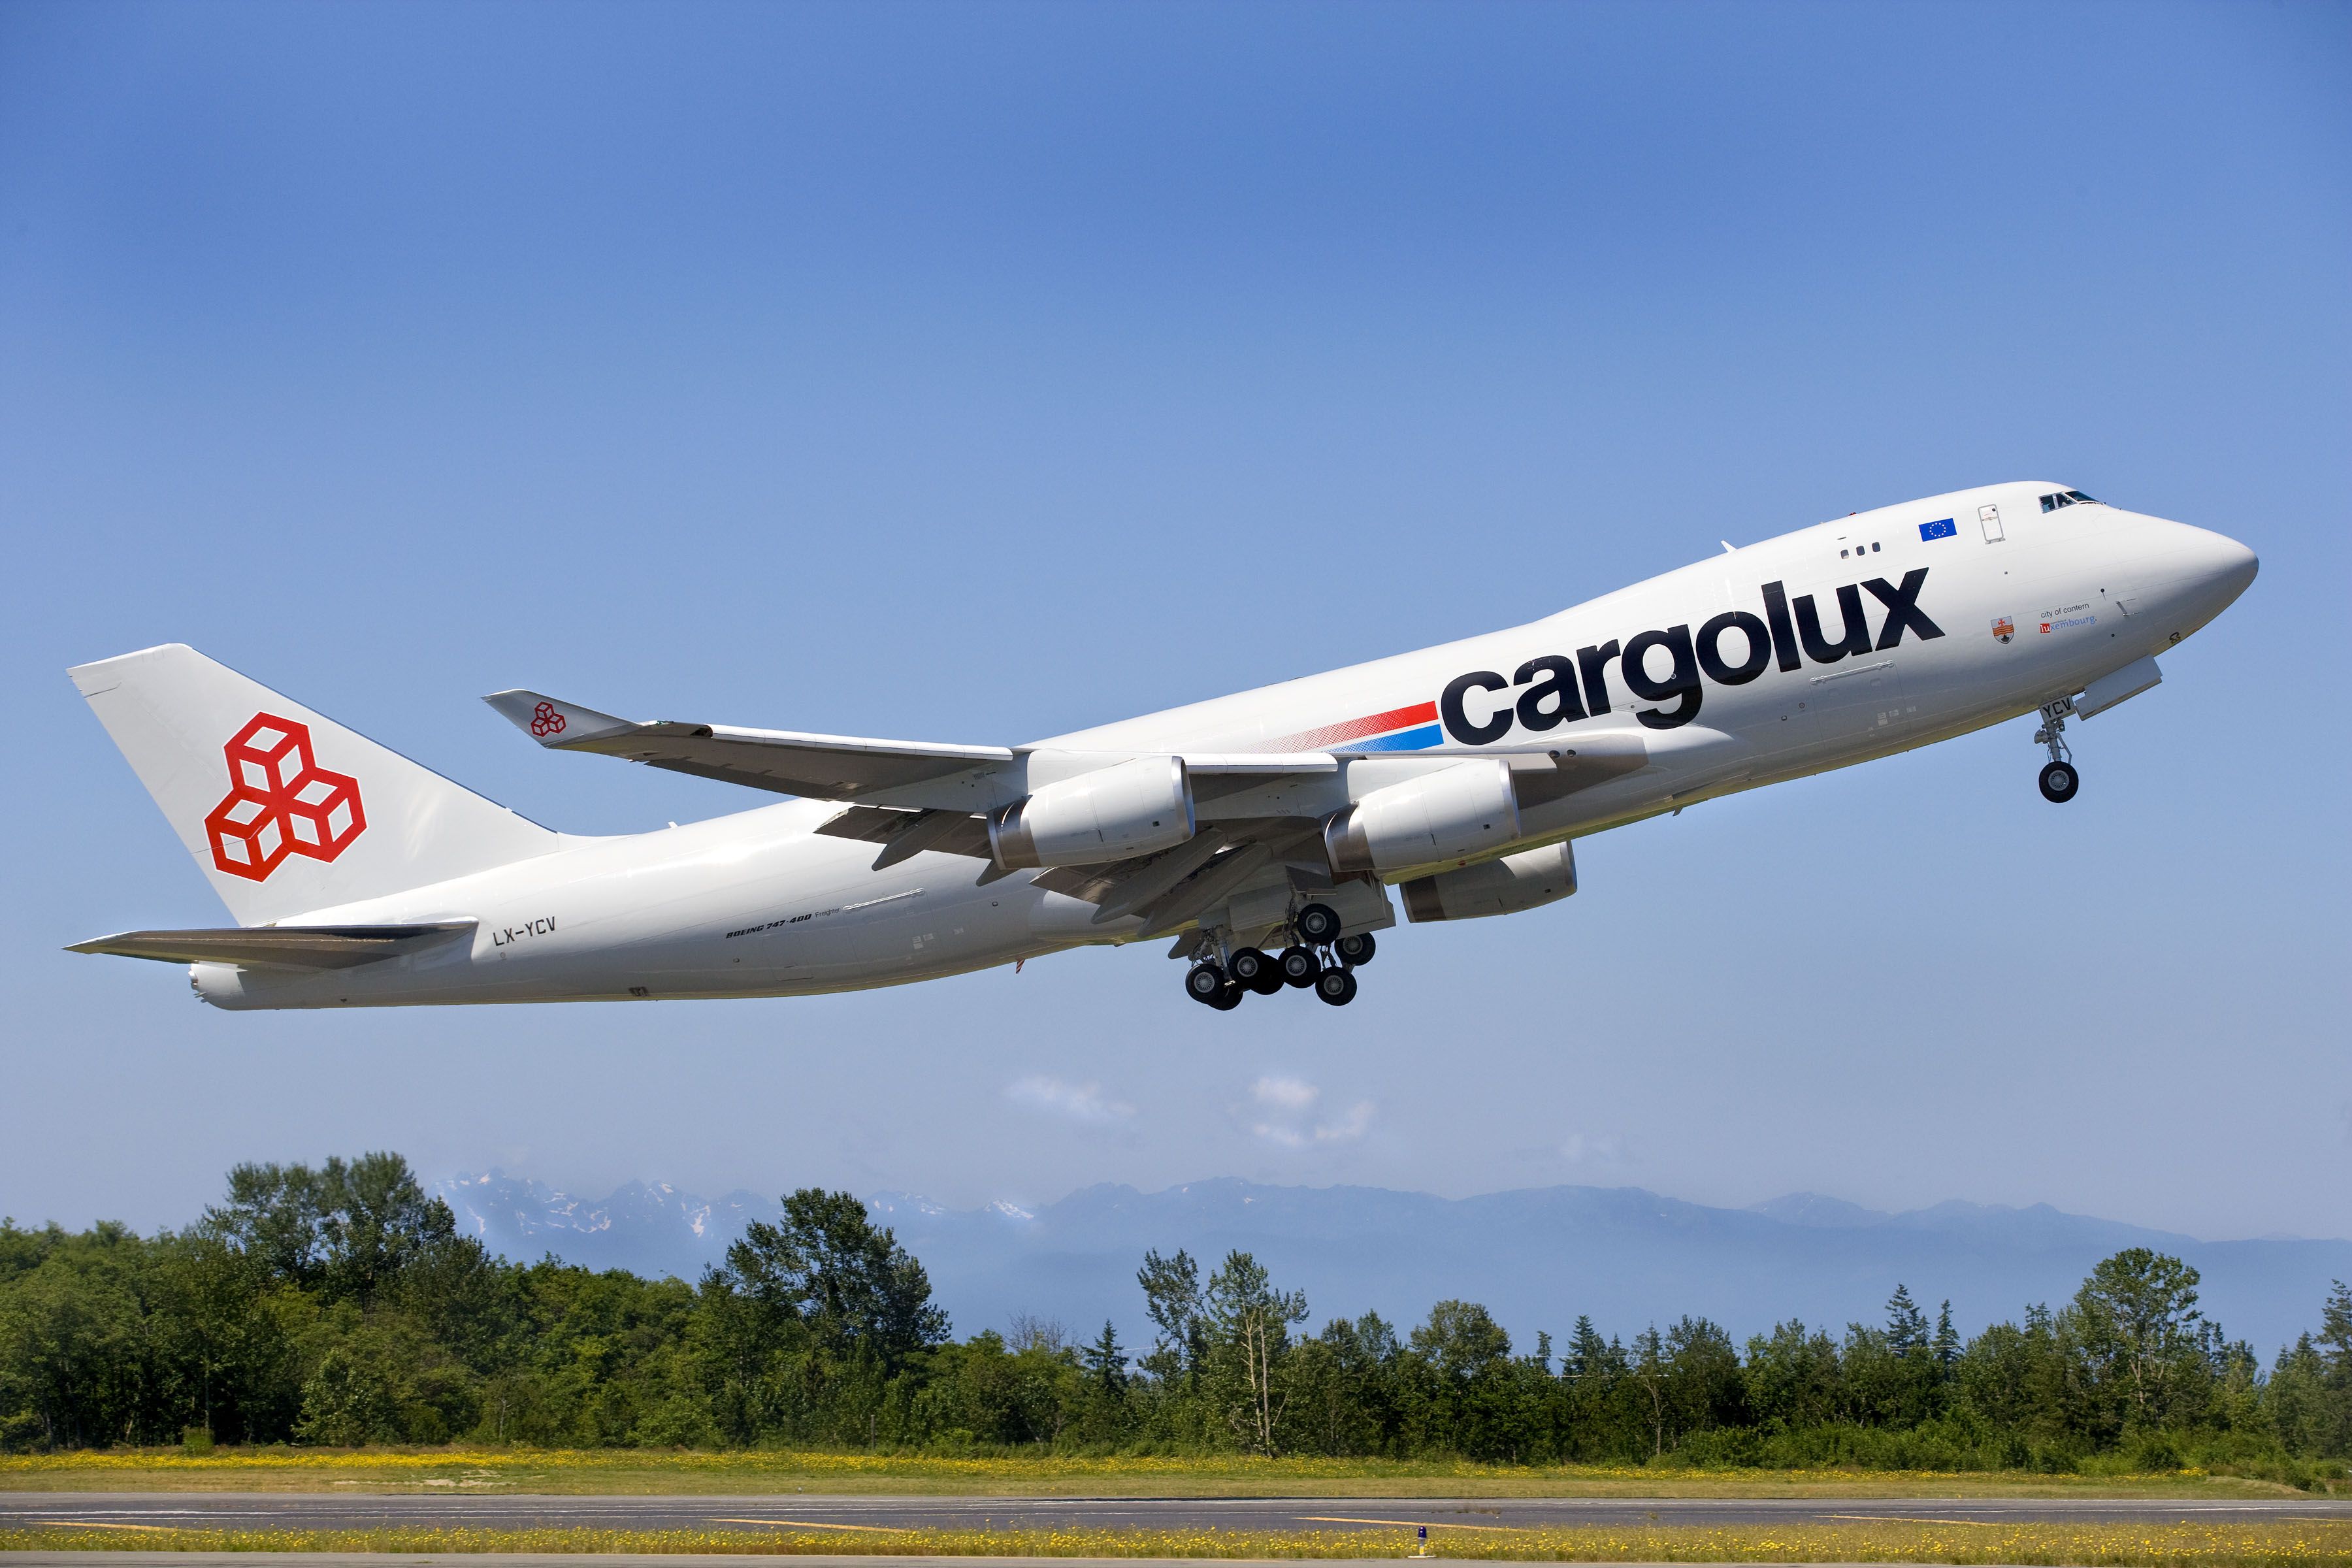 Cargolux Boeing 747-400F